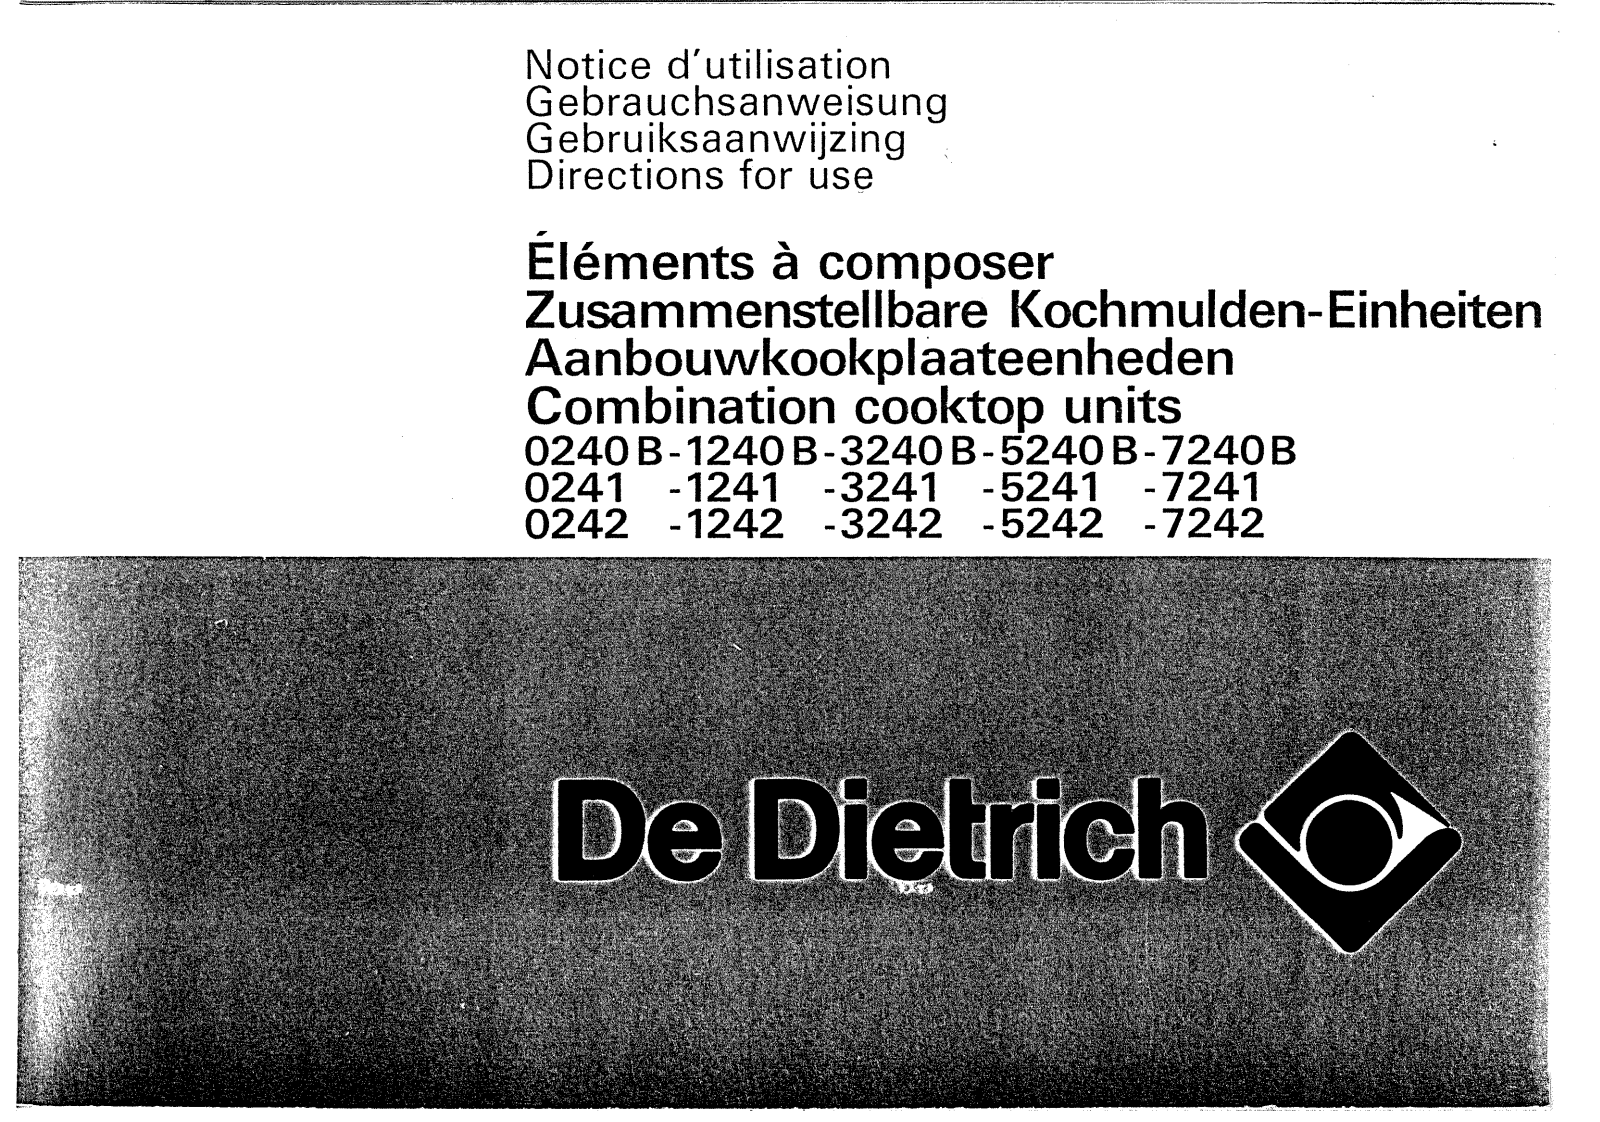 De dietrich 241, 3240B, 3242, 240B, 1242 User Manual